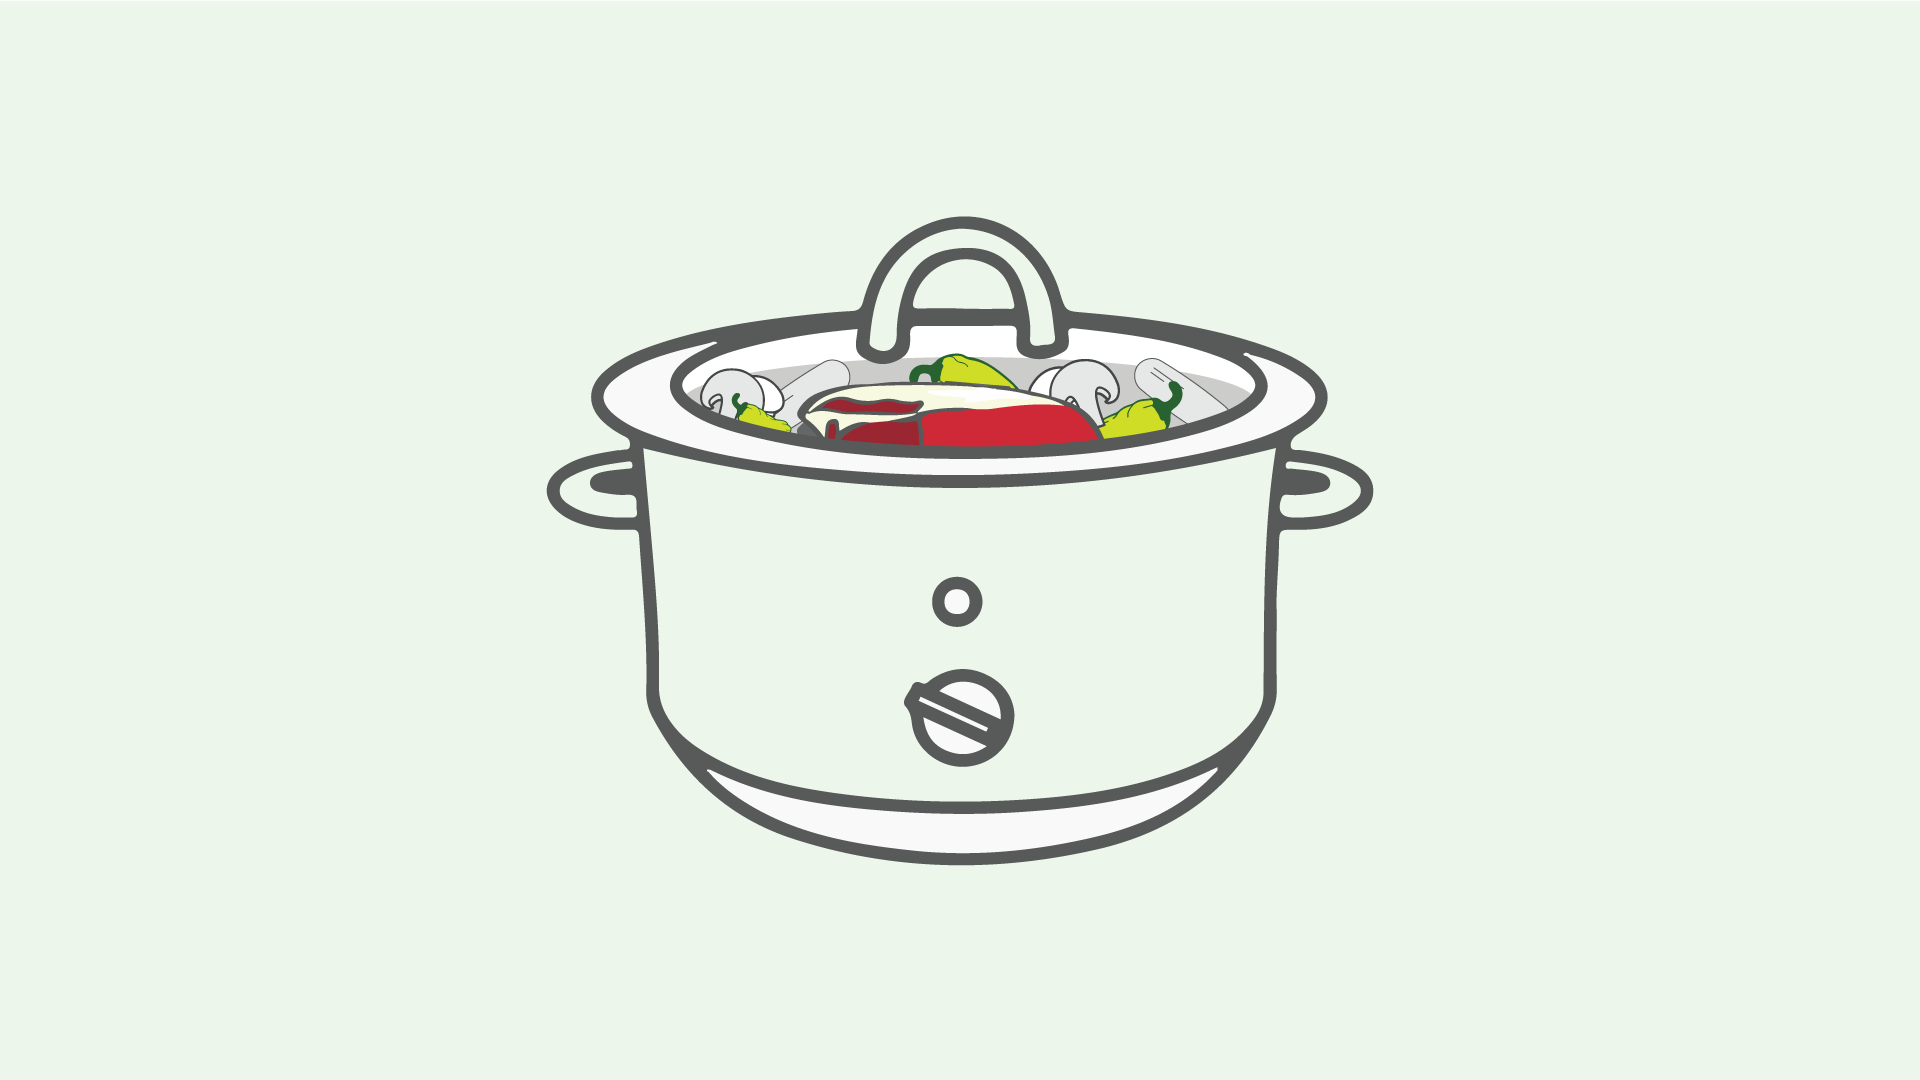 mississippi pot roast in a crock pot